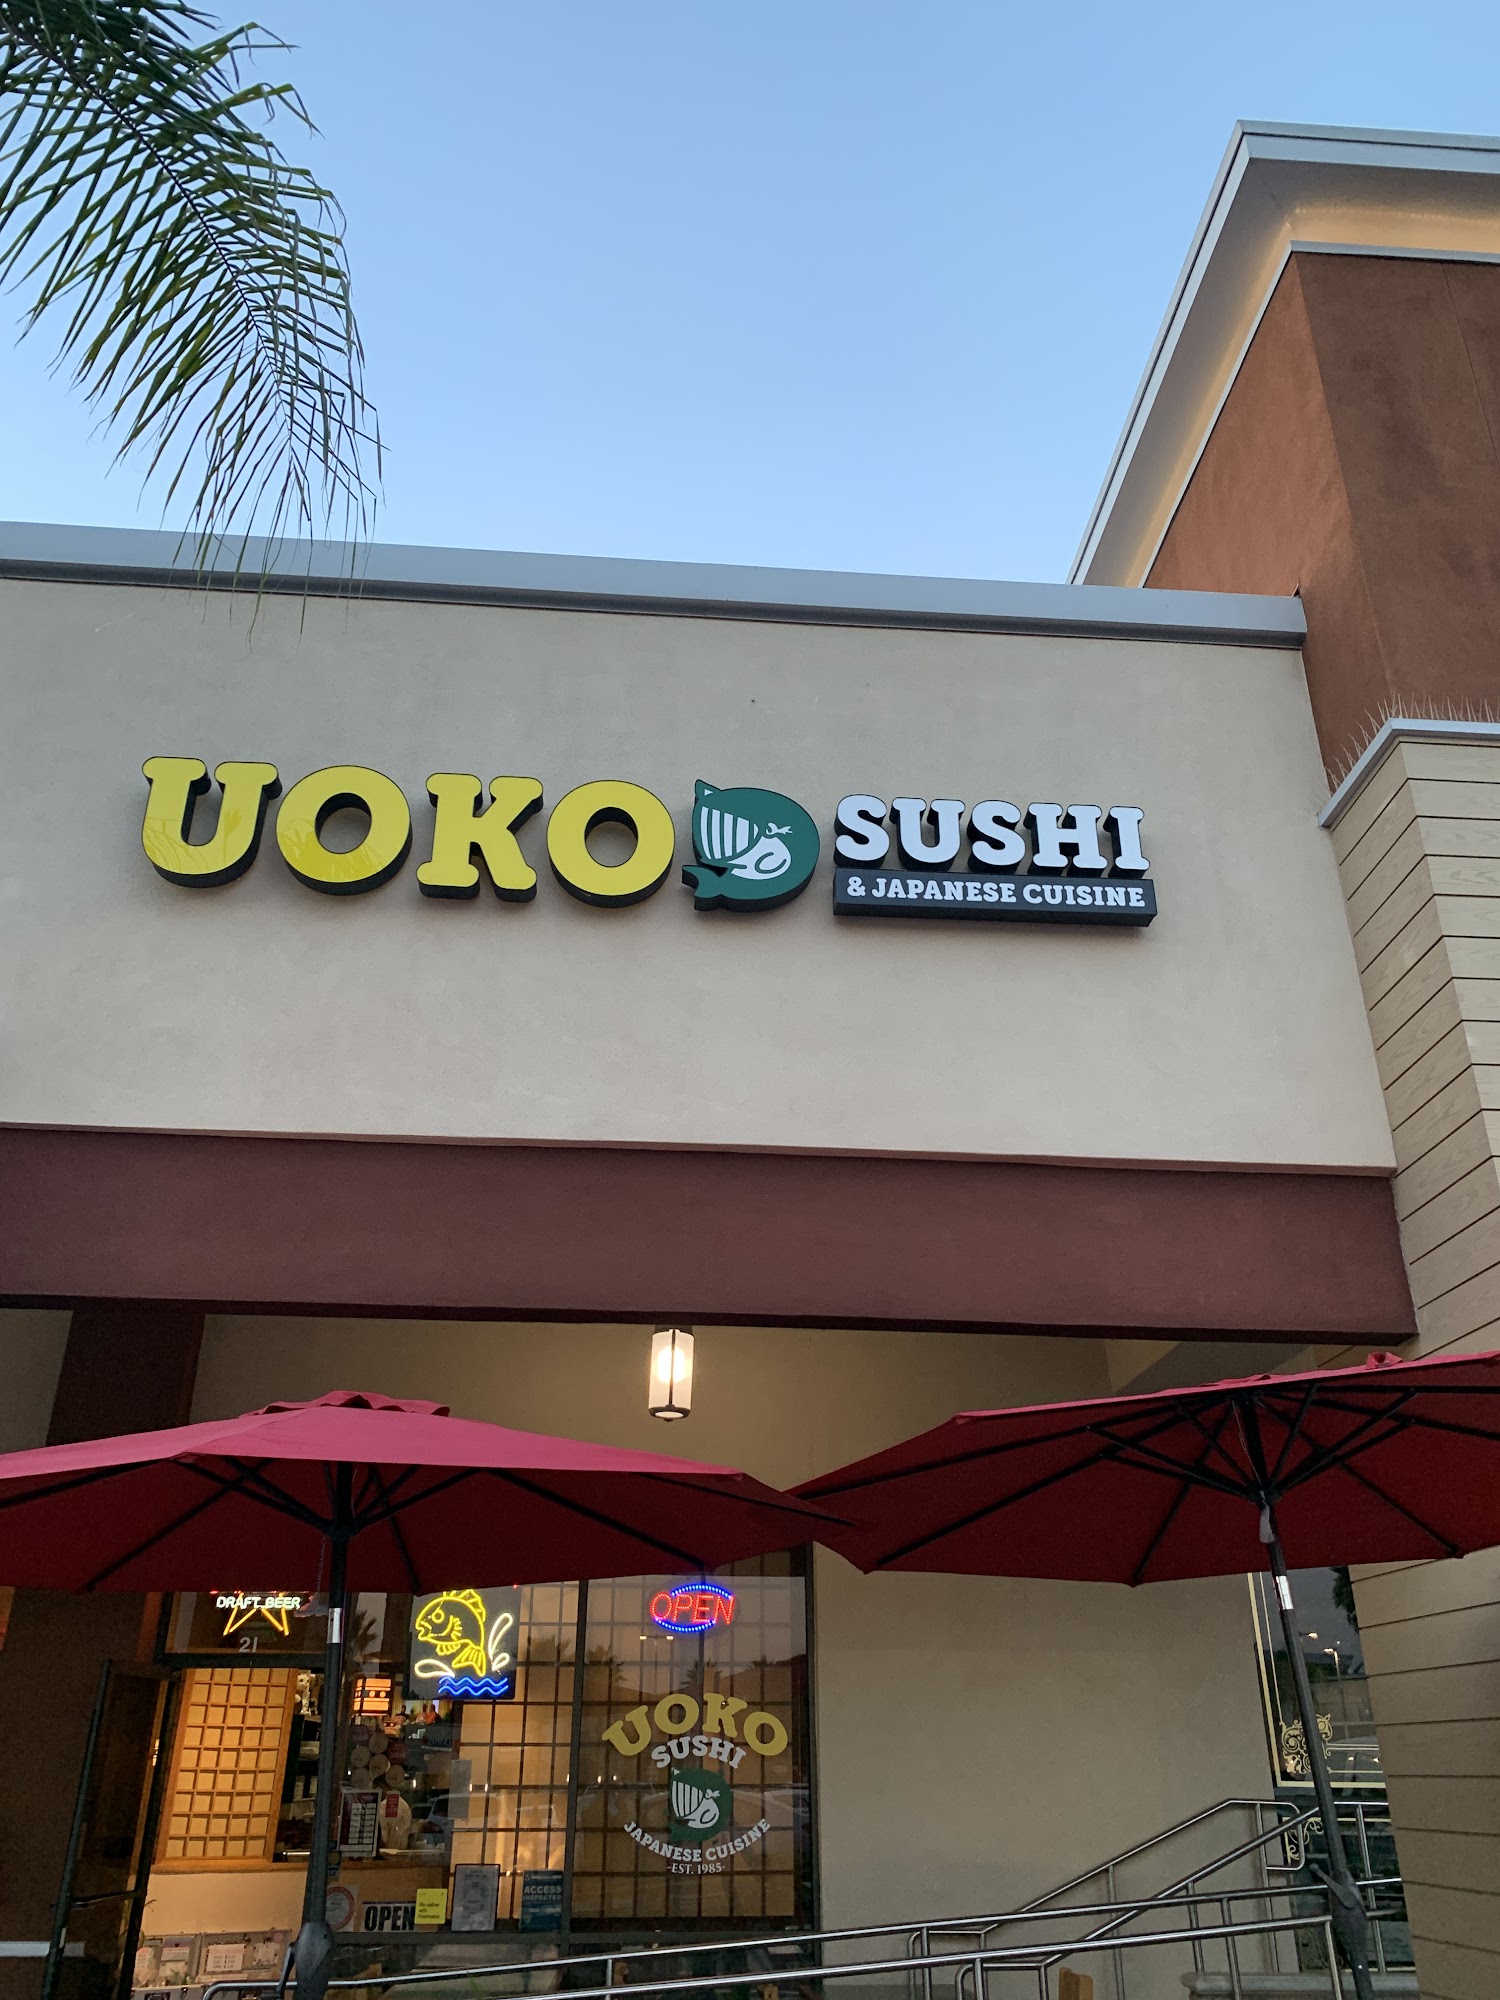 Uoko Sushi and Japanese Cuisine